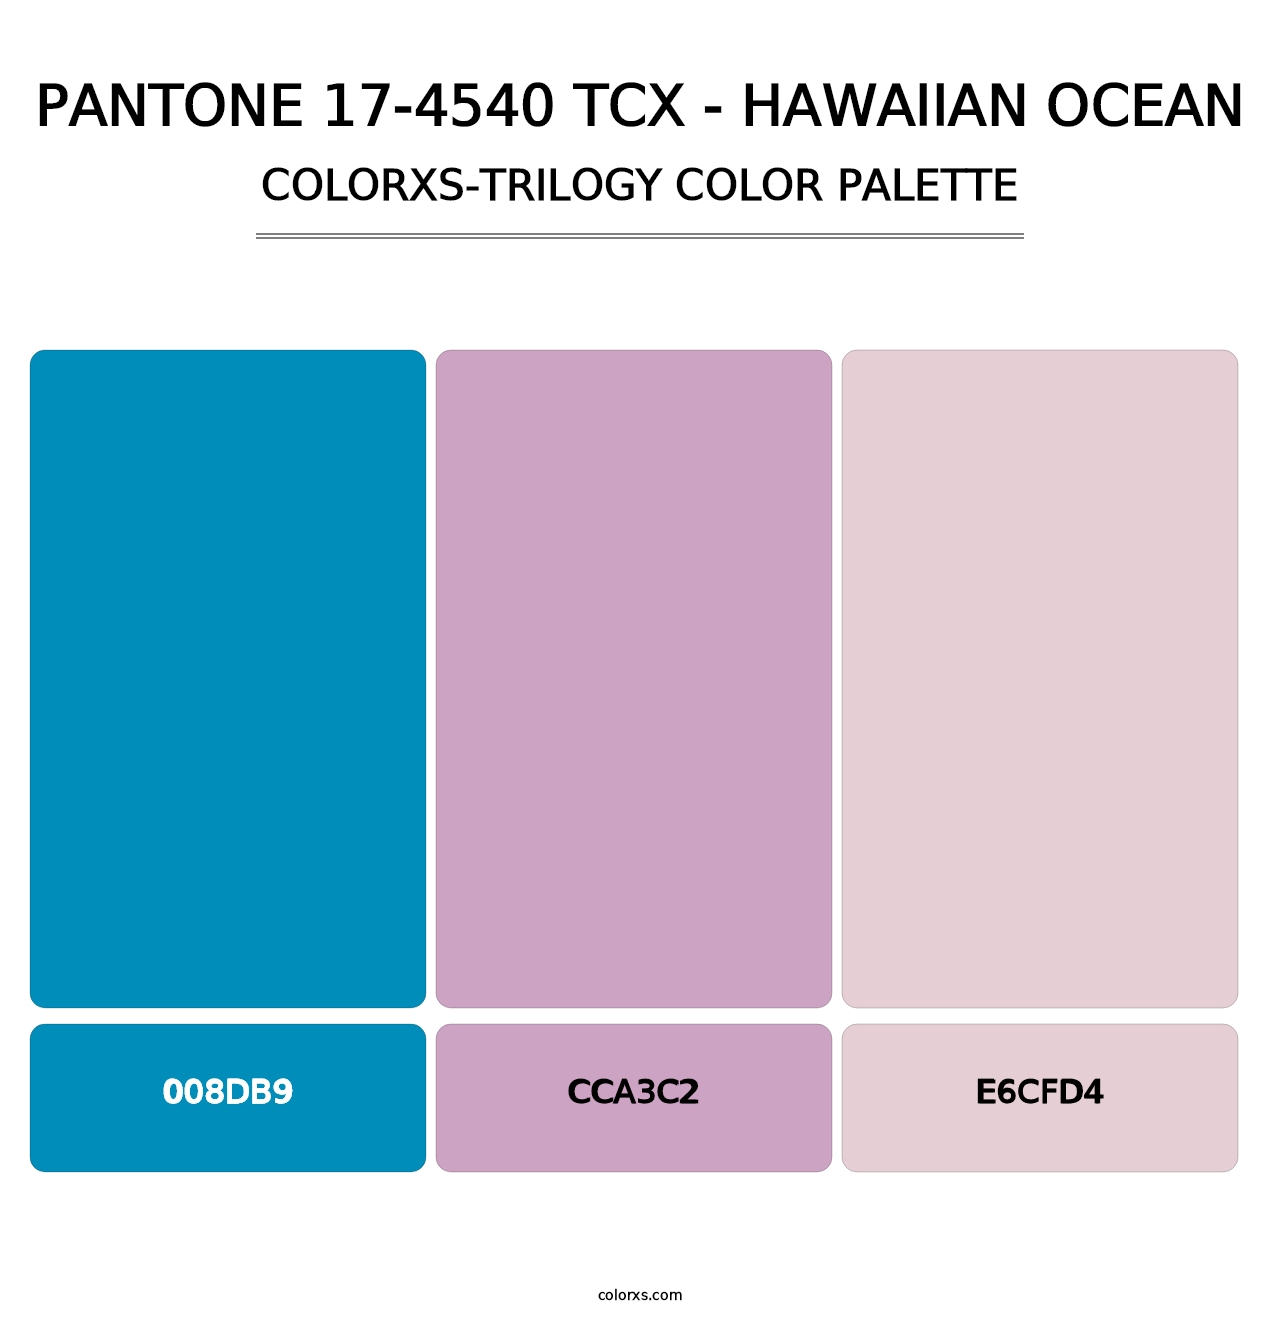 PANTONE 17-4540 TCX - Hawaiian Ocean - Colorxs Trilogy Palette